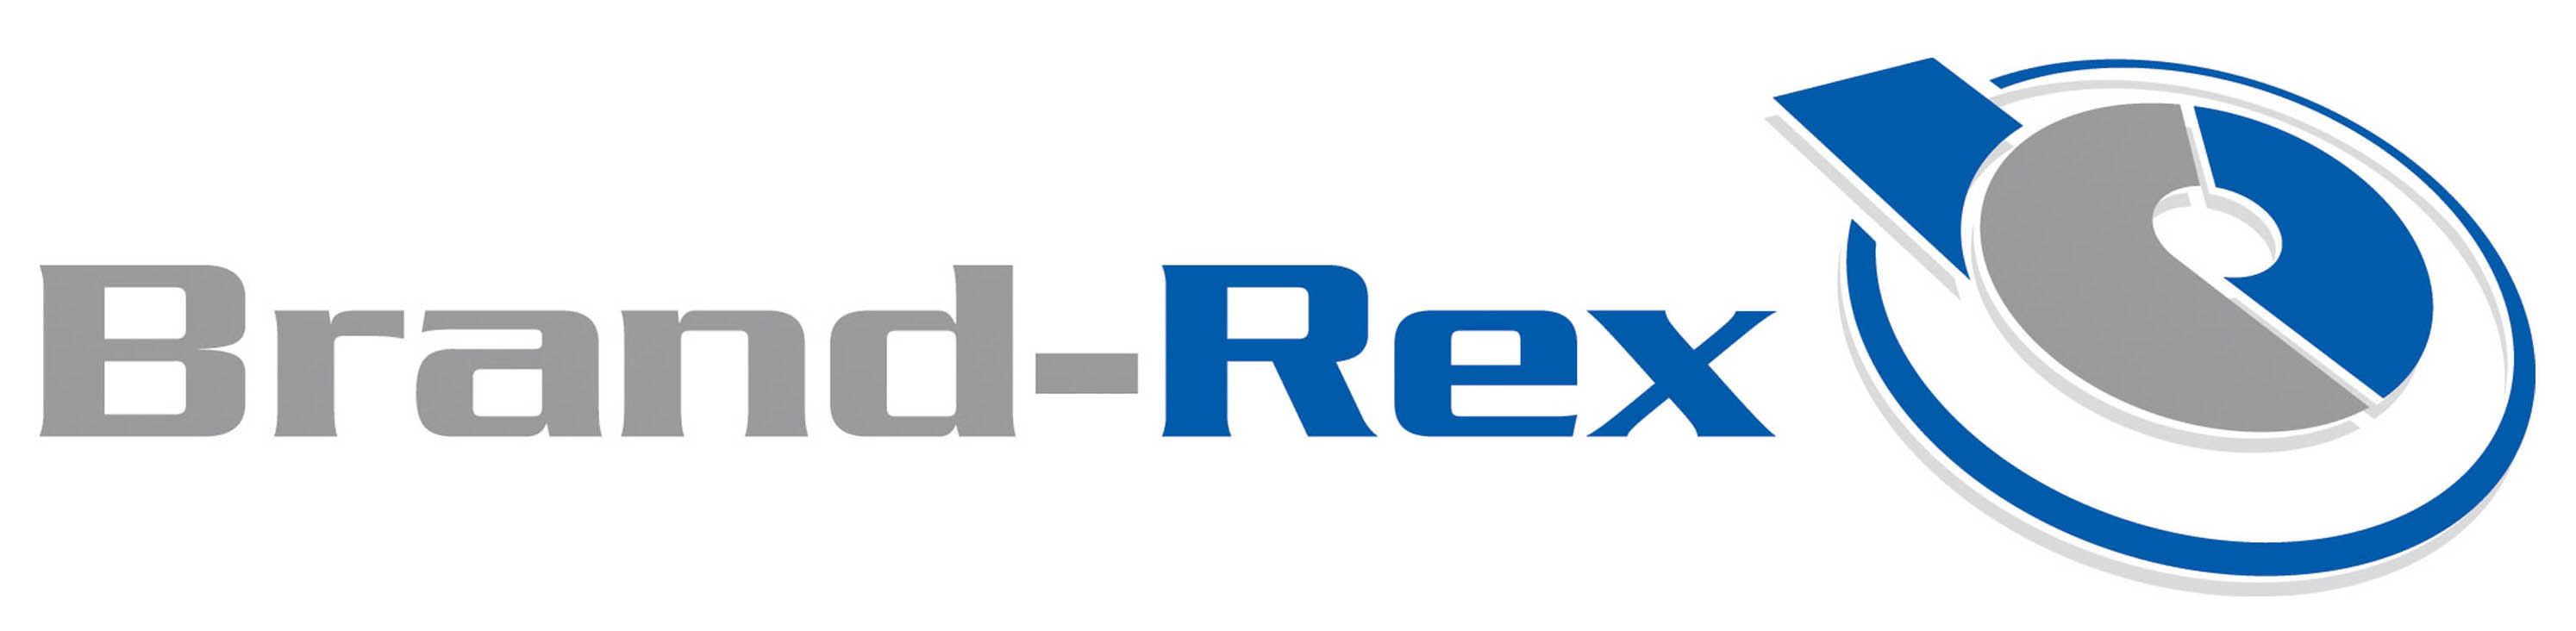 Brand-Rex